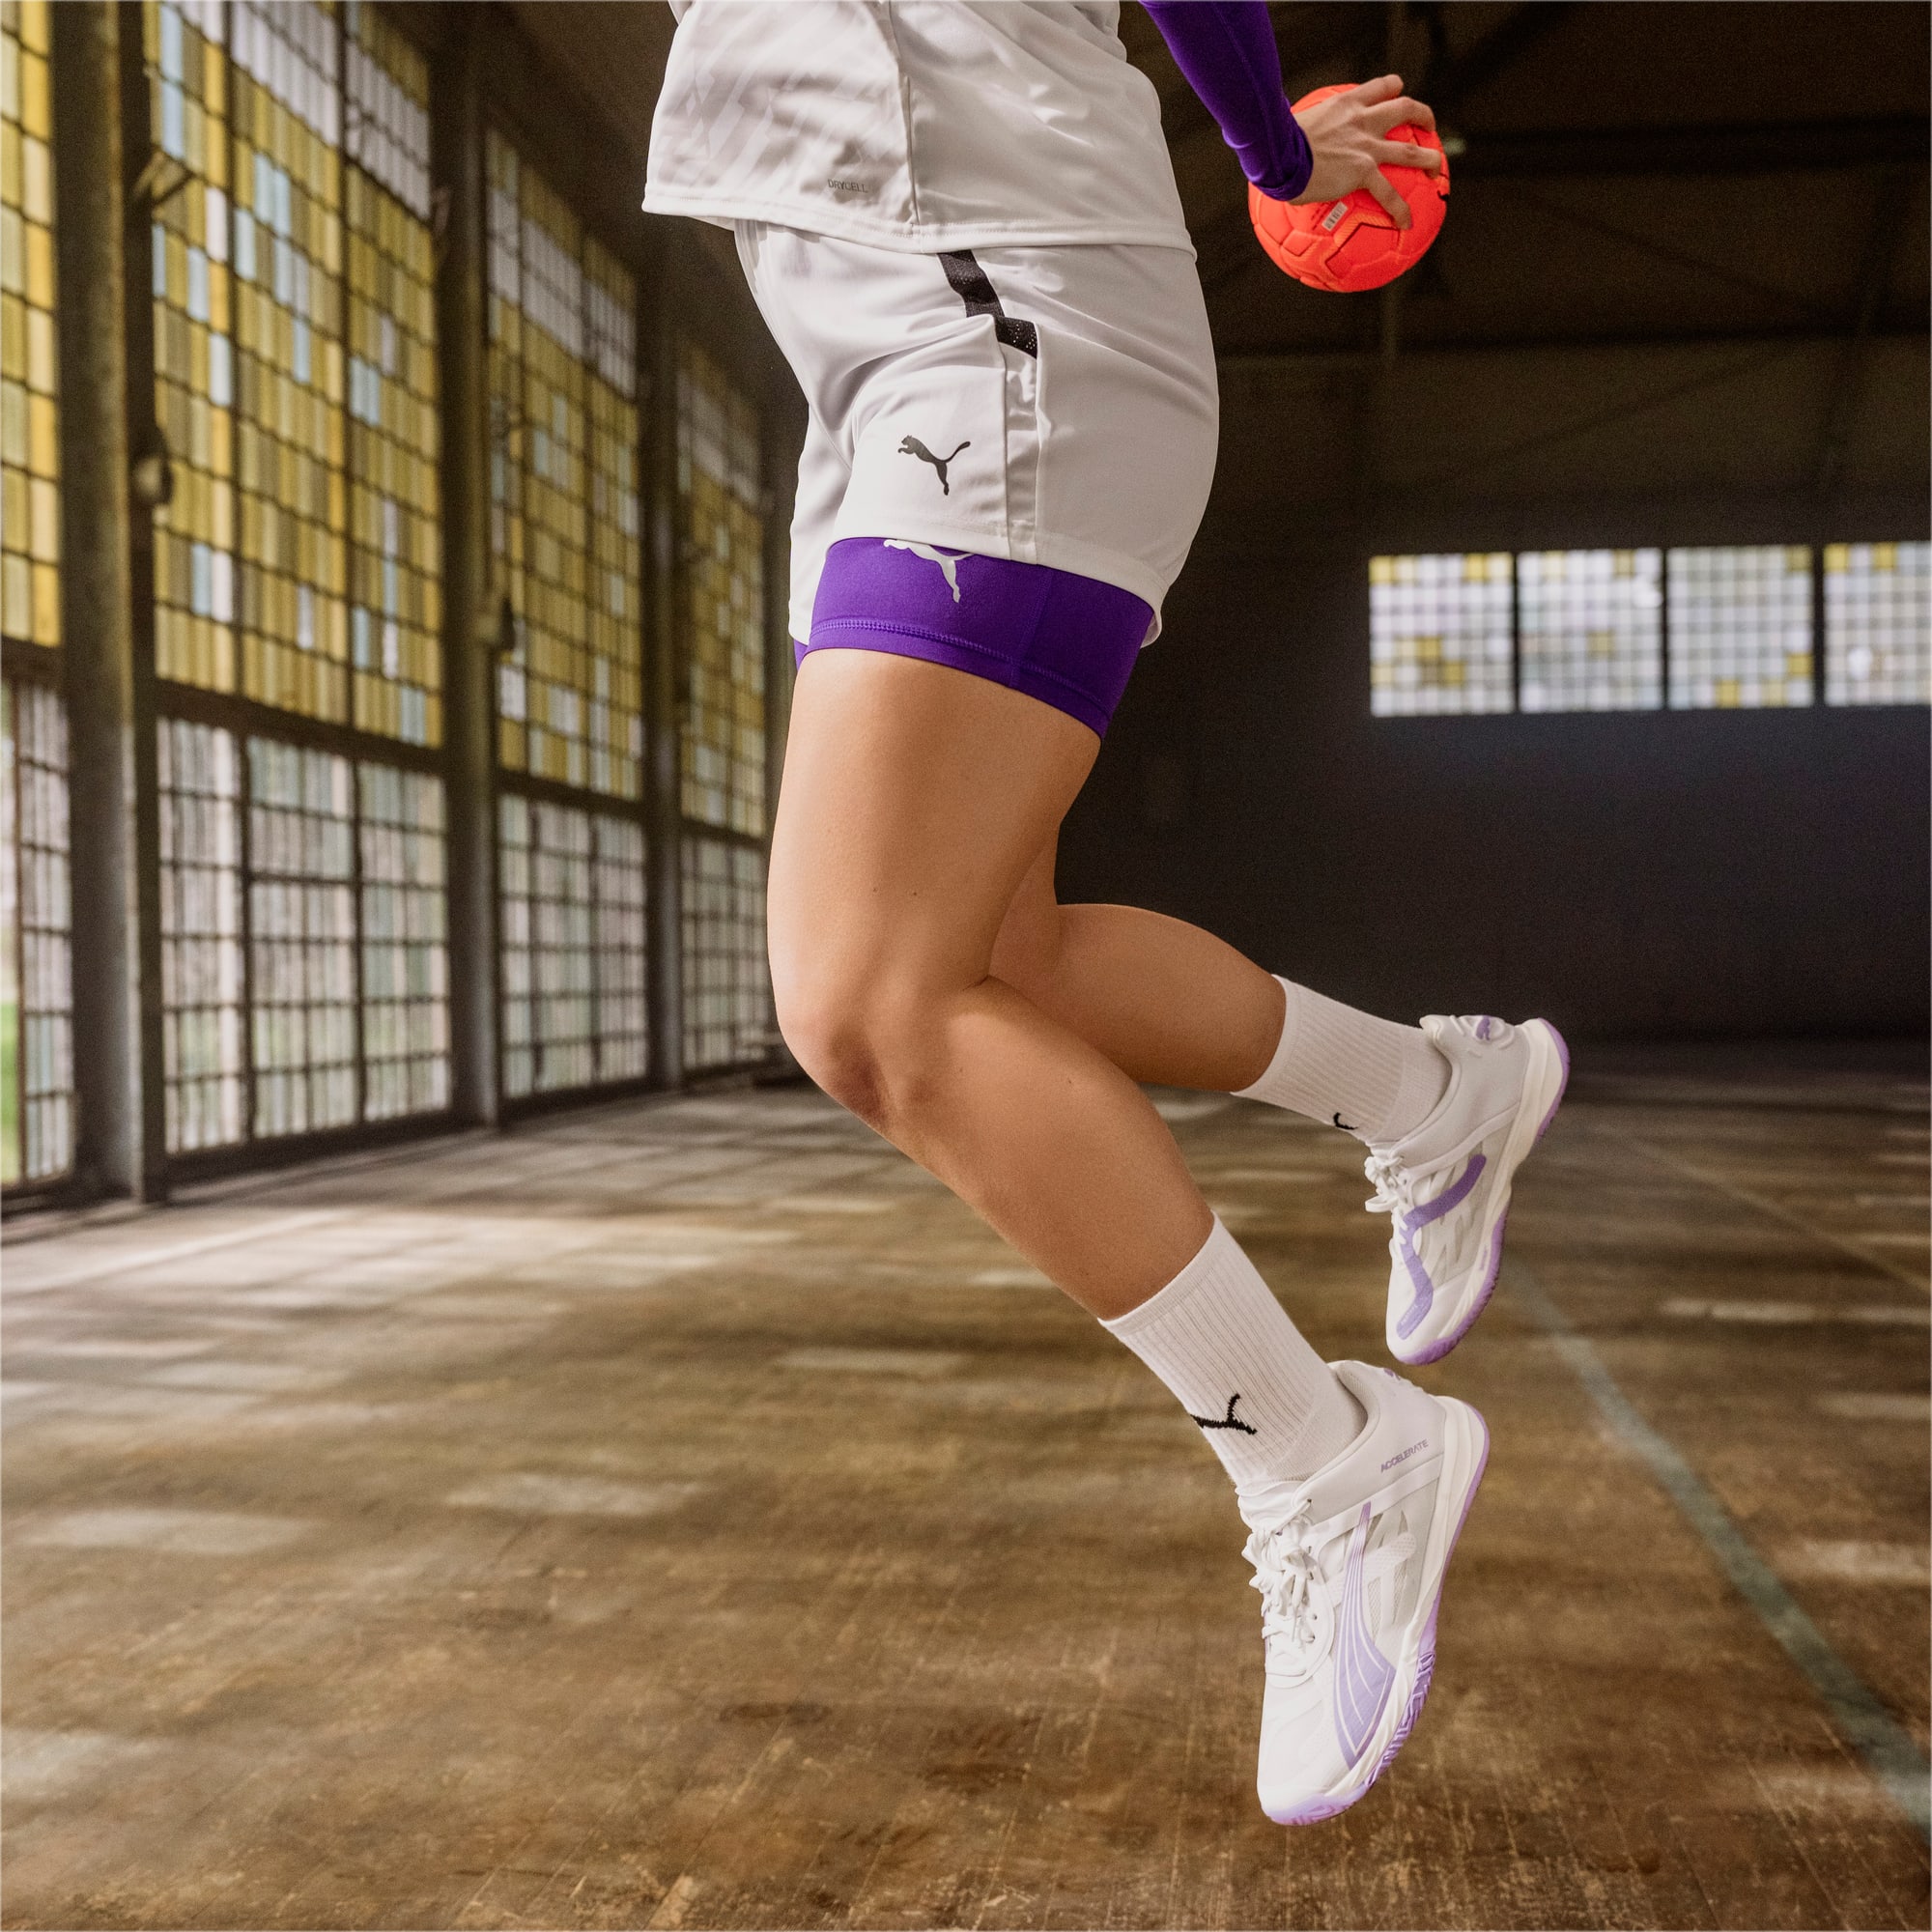 PUMA Accelerate Nitro Sqd Women's Indoor Shoe Sneakers, White/Vivid Violet